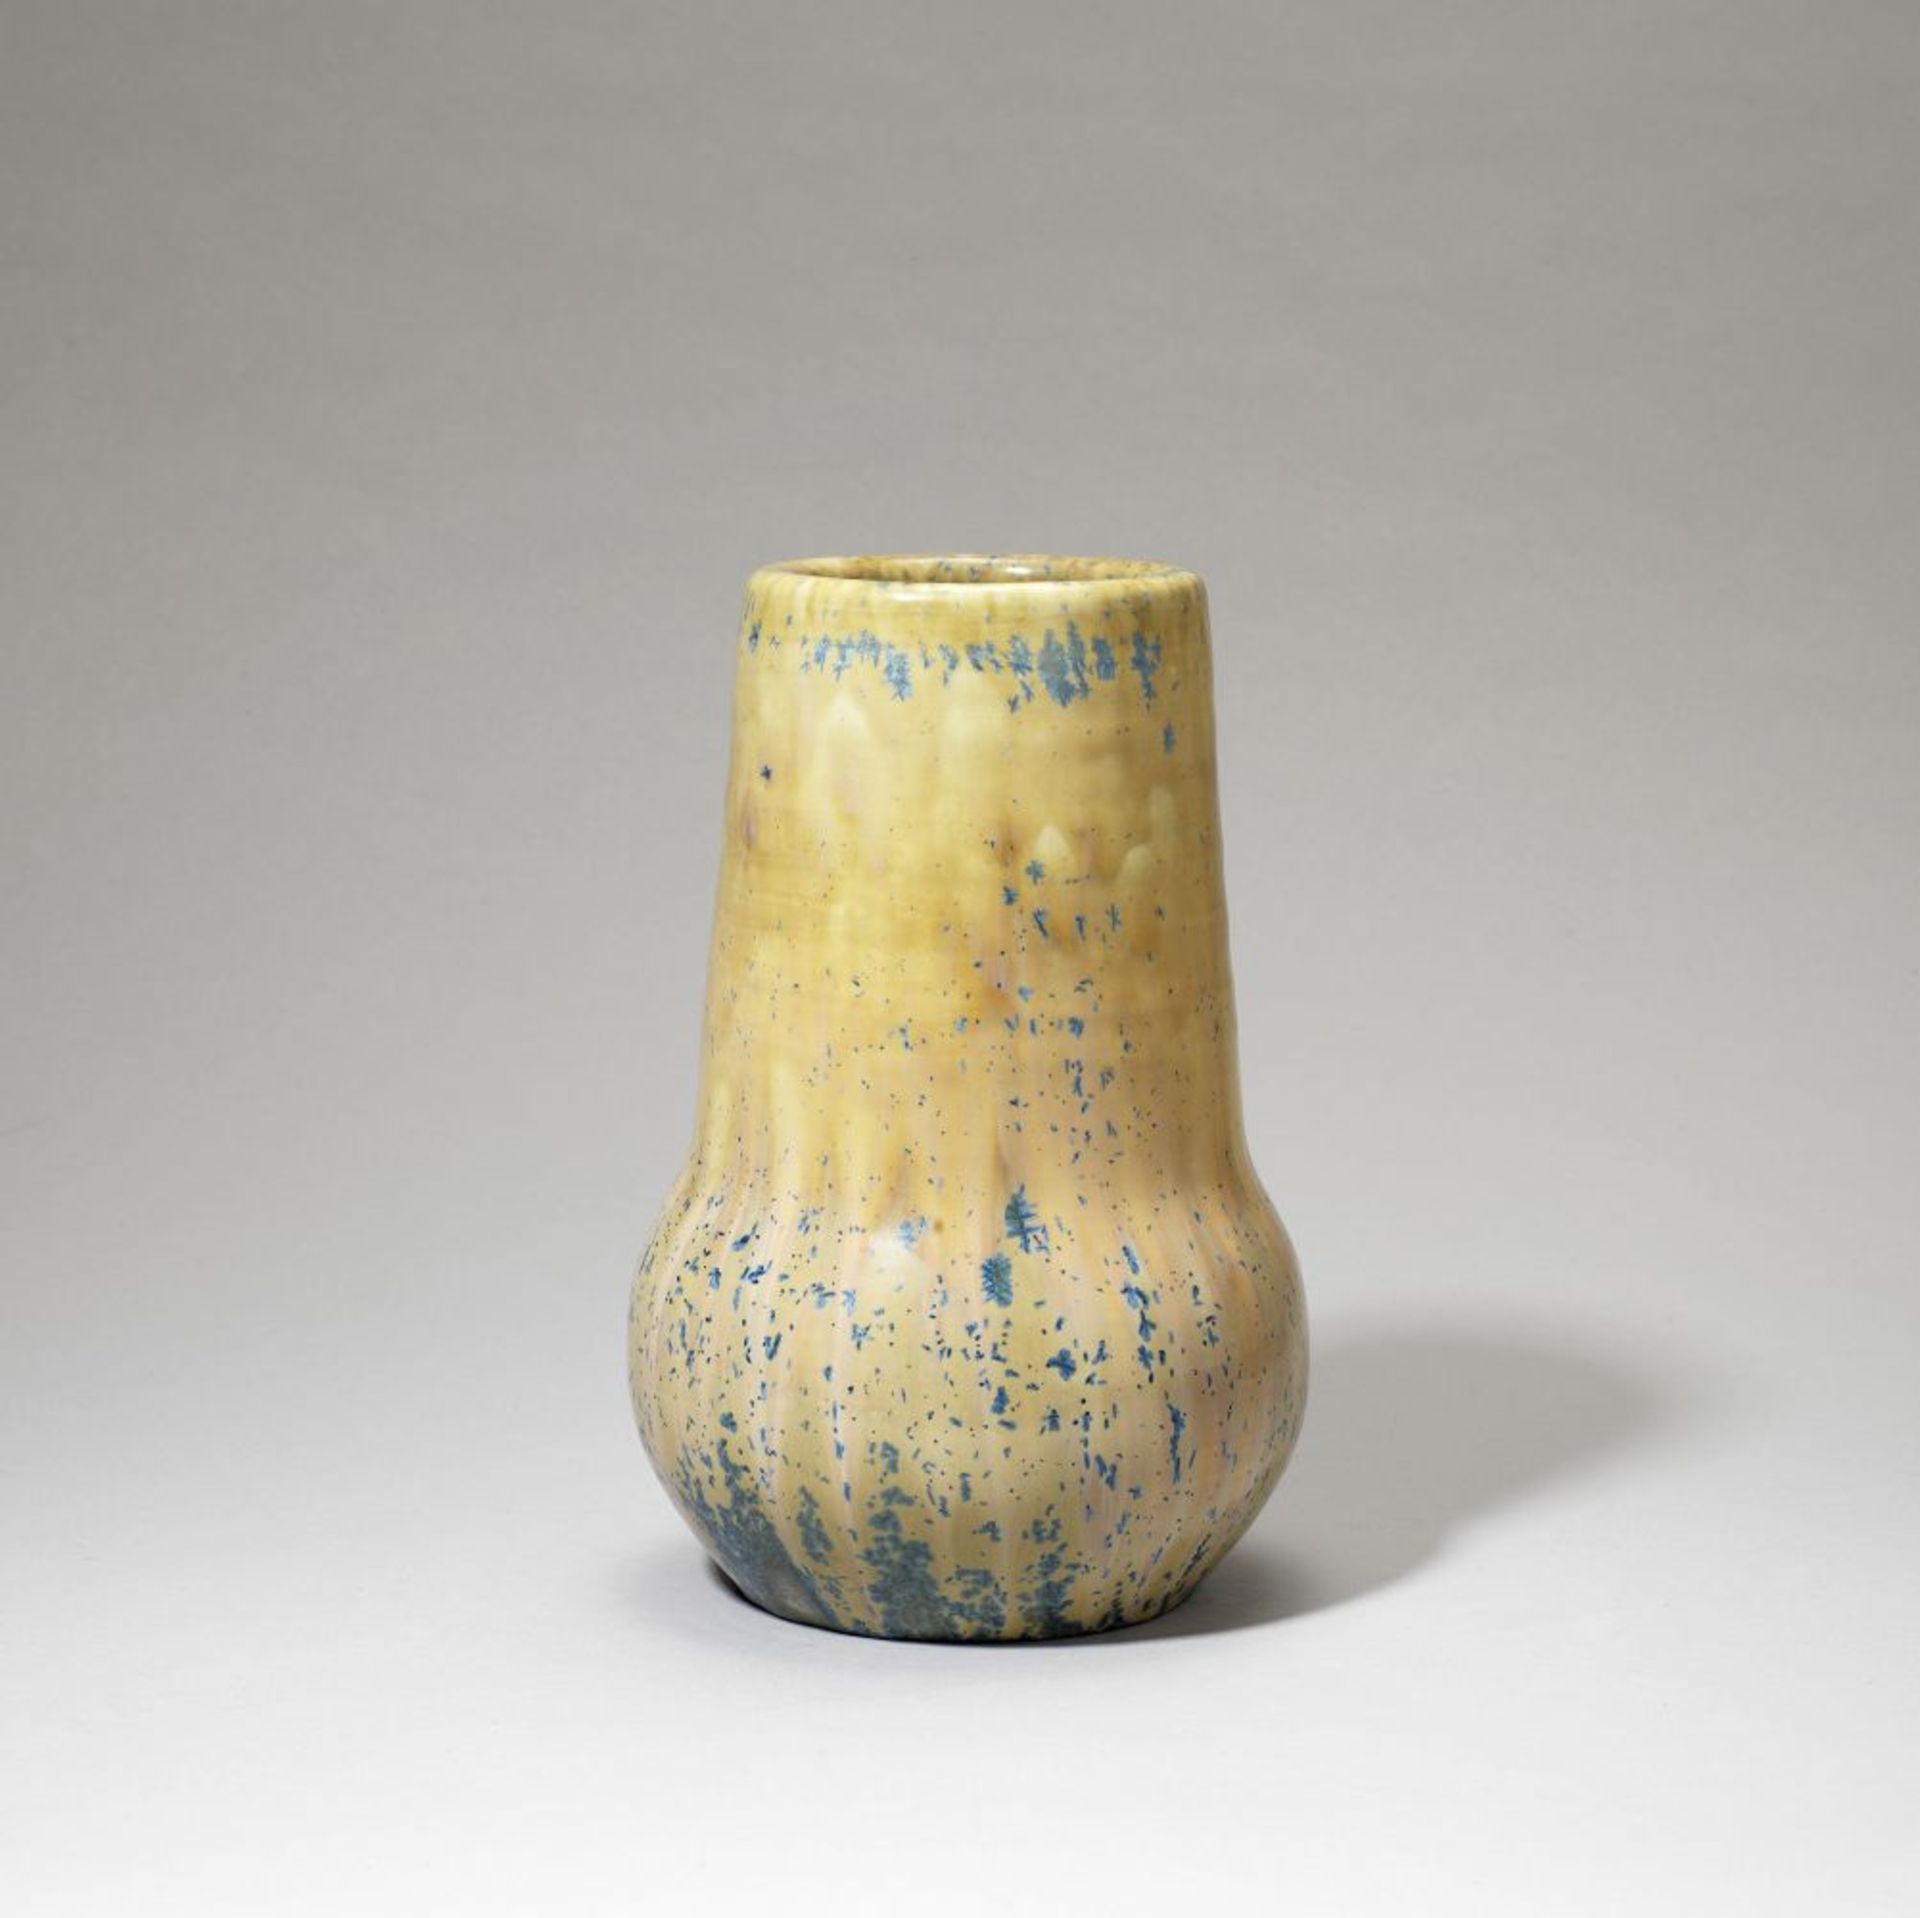 Ruskin Pottery Vase, model no. 263, circa 1930